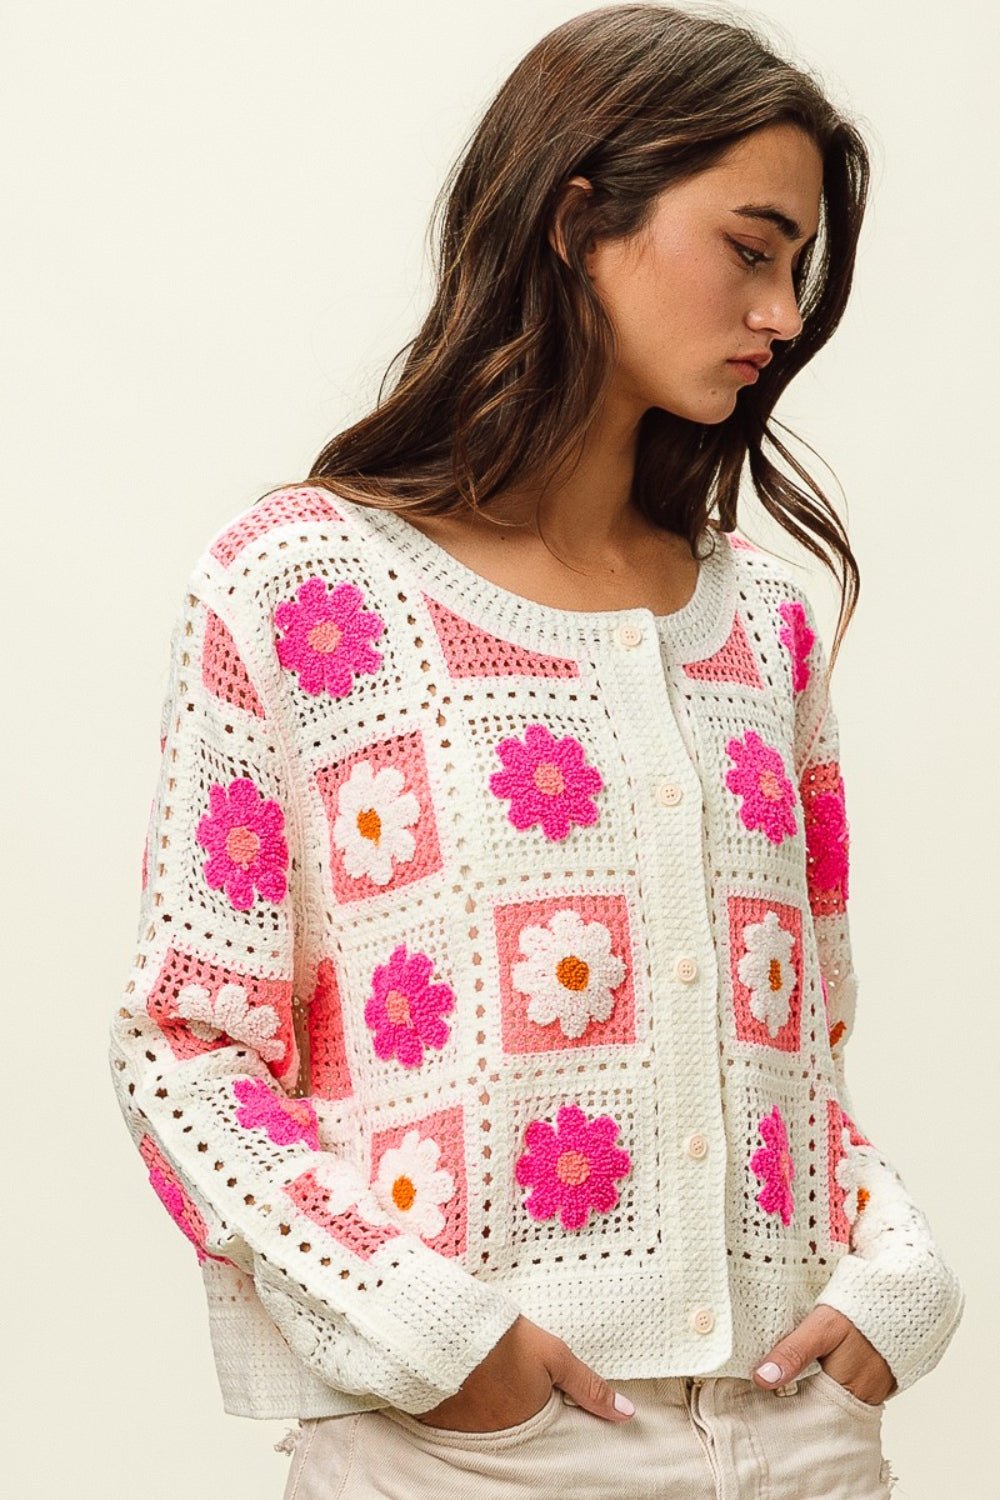 BiBi Flower Crochet Lace Button Up Cardigan - Happily Ever Atchison Shop Co.